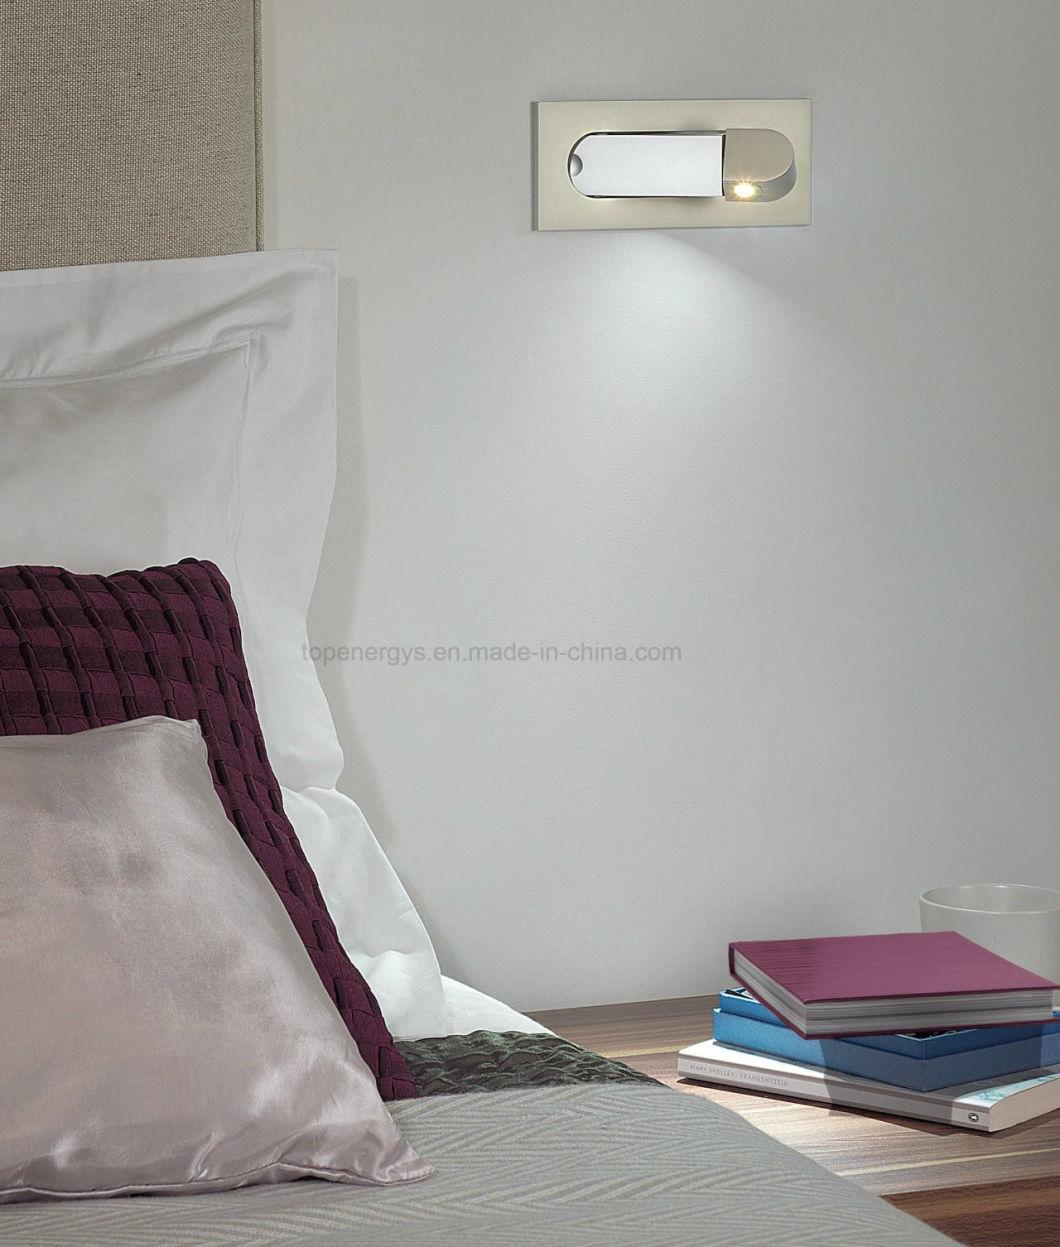 Rotatable LED Wall Lamp Bh-020 Decorative Adjustable Headboard Light Hotel Bedside Reading Light